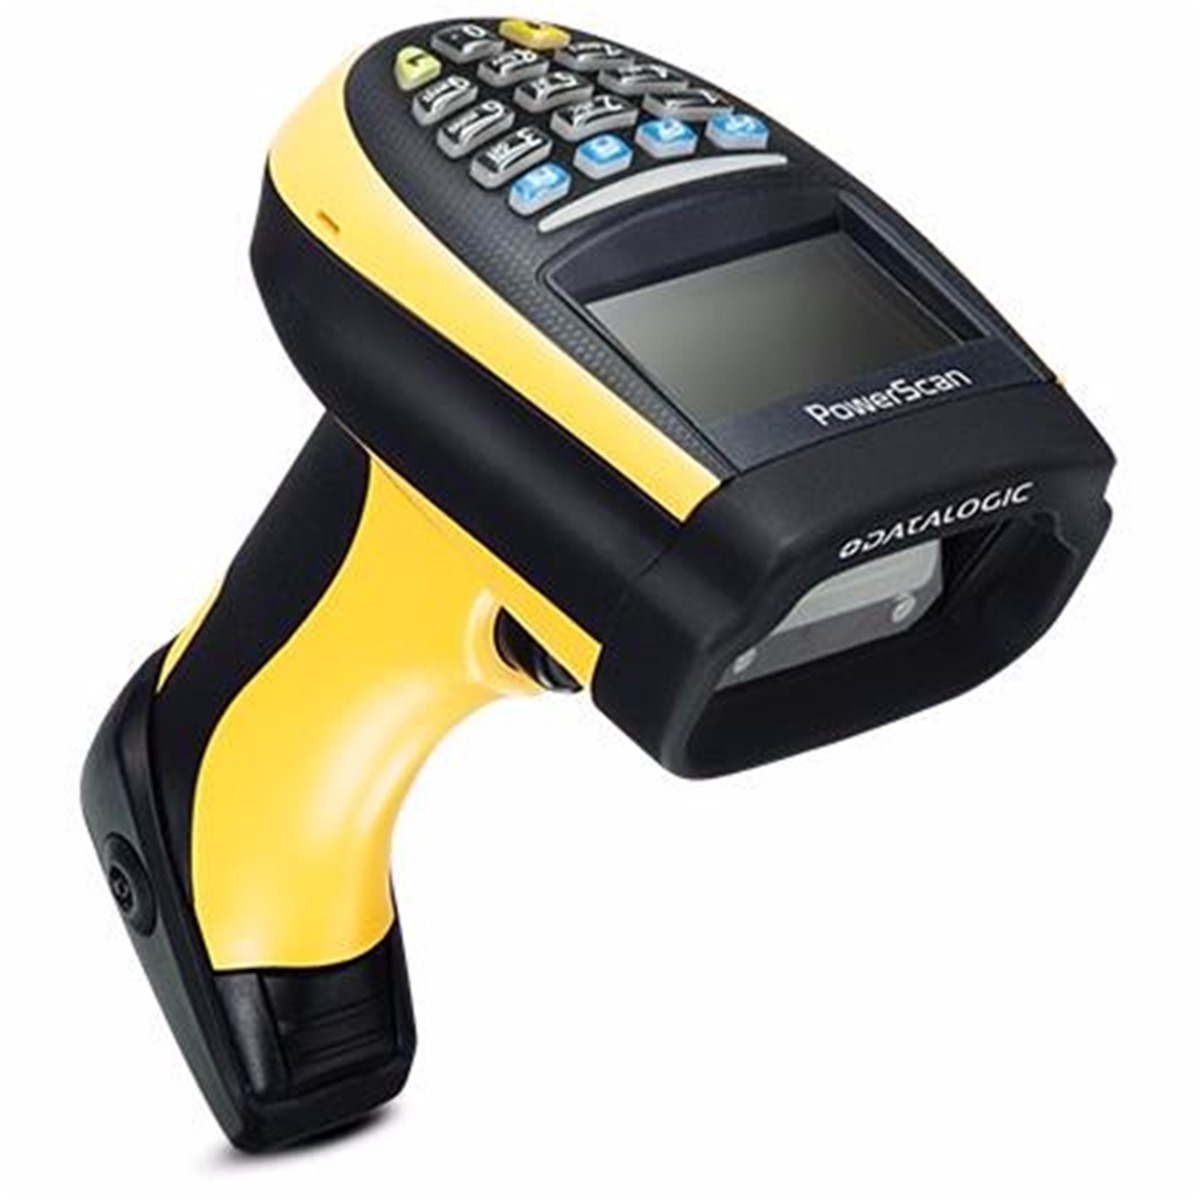 PowerScan PM9500 barcode reader